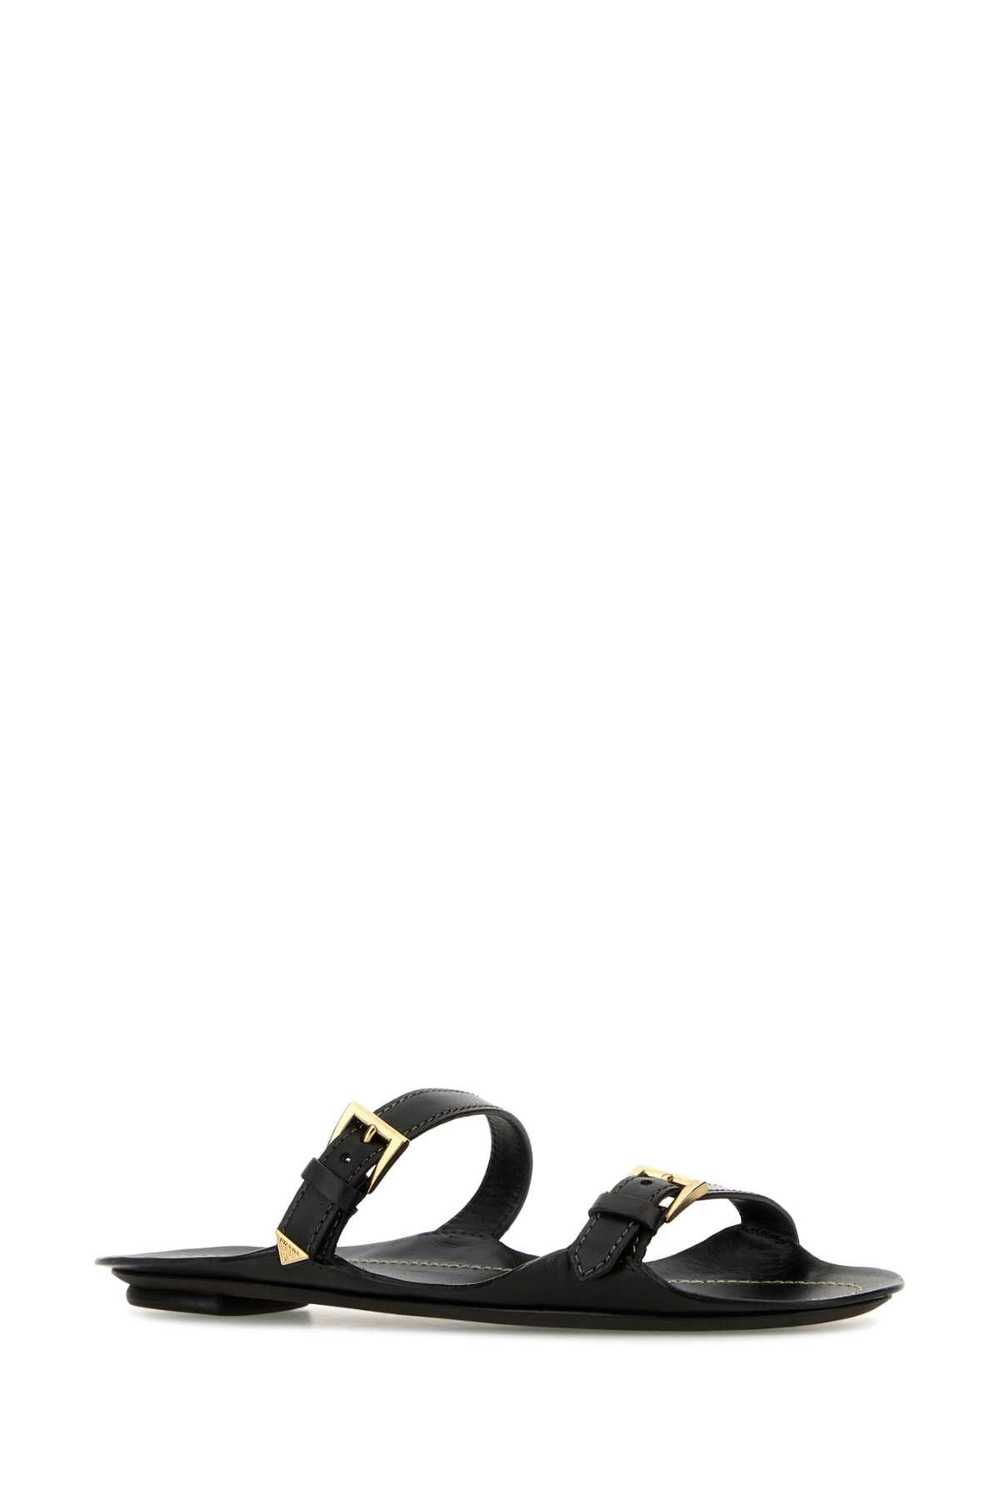 Prada Black Leather Slippers - image 2